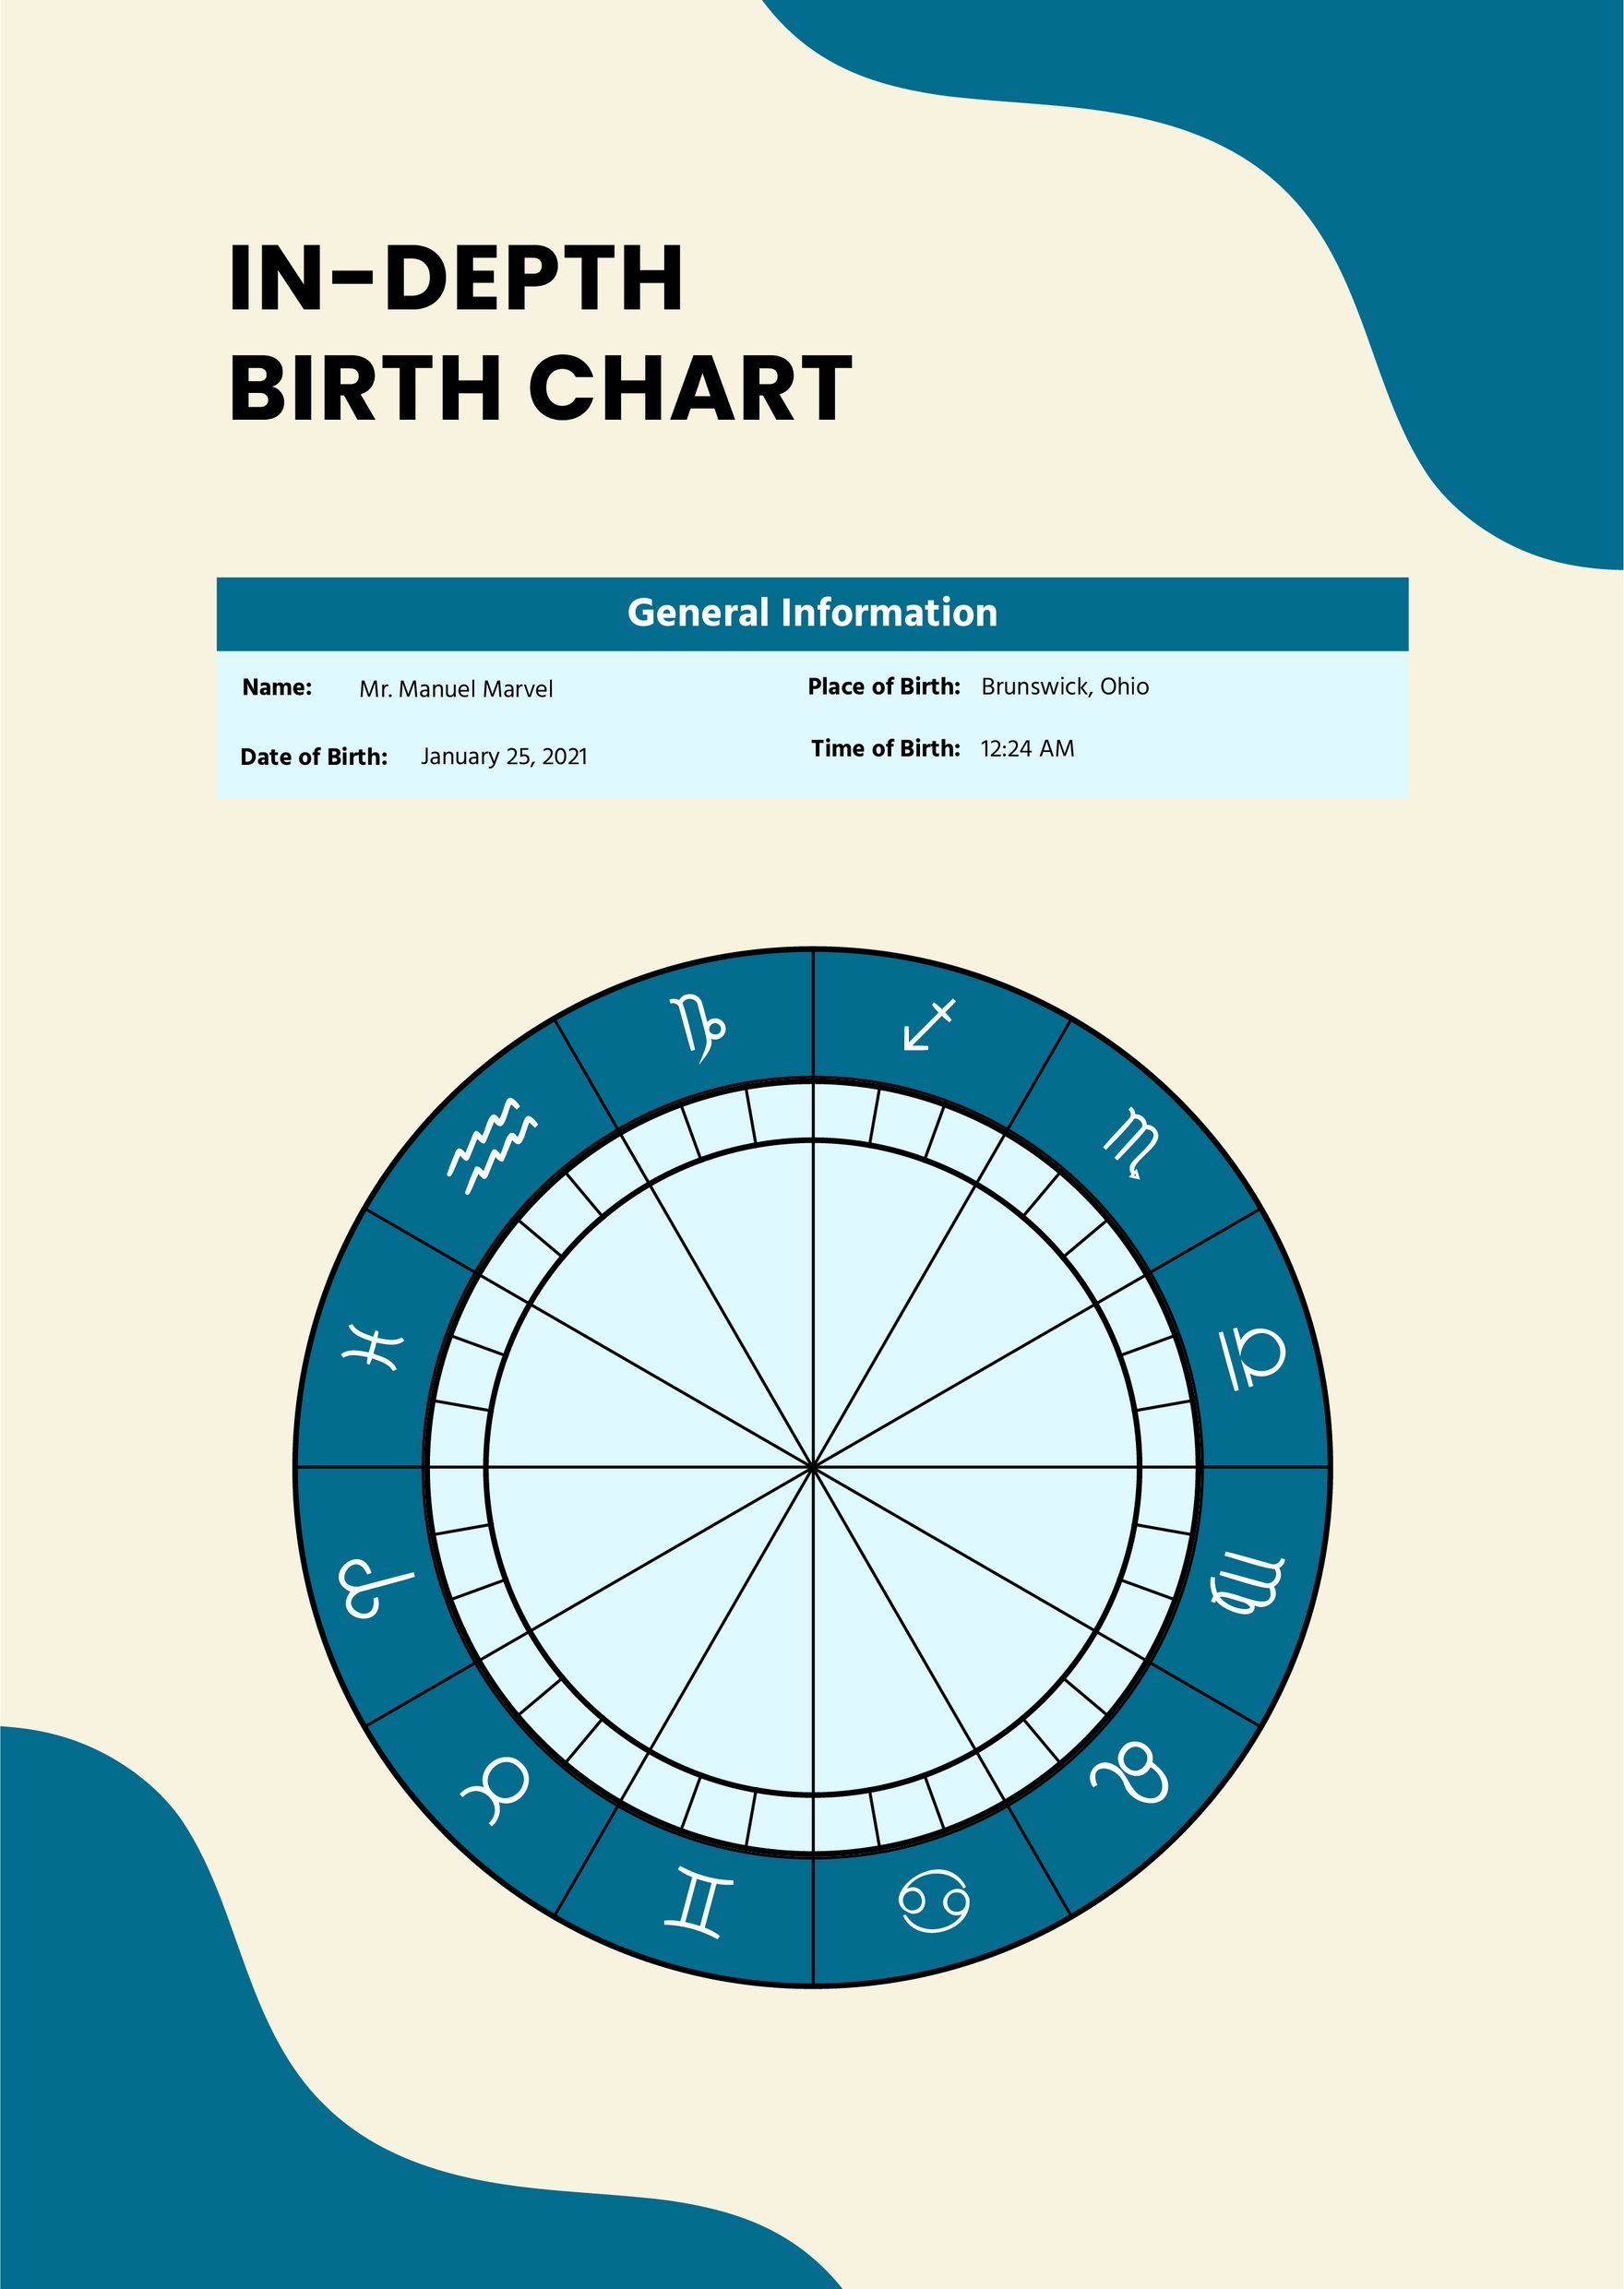 In-depth Birth Chart Template